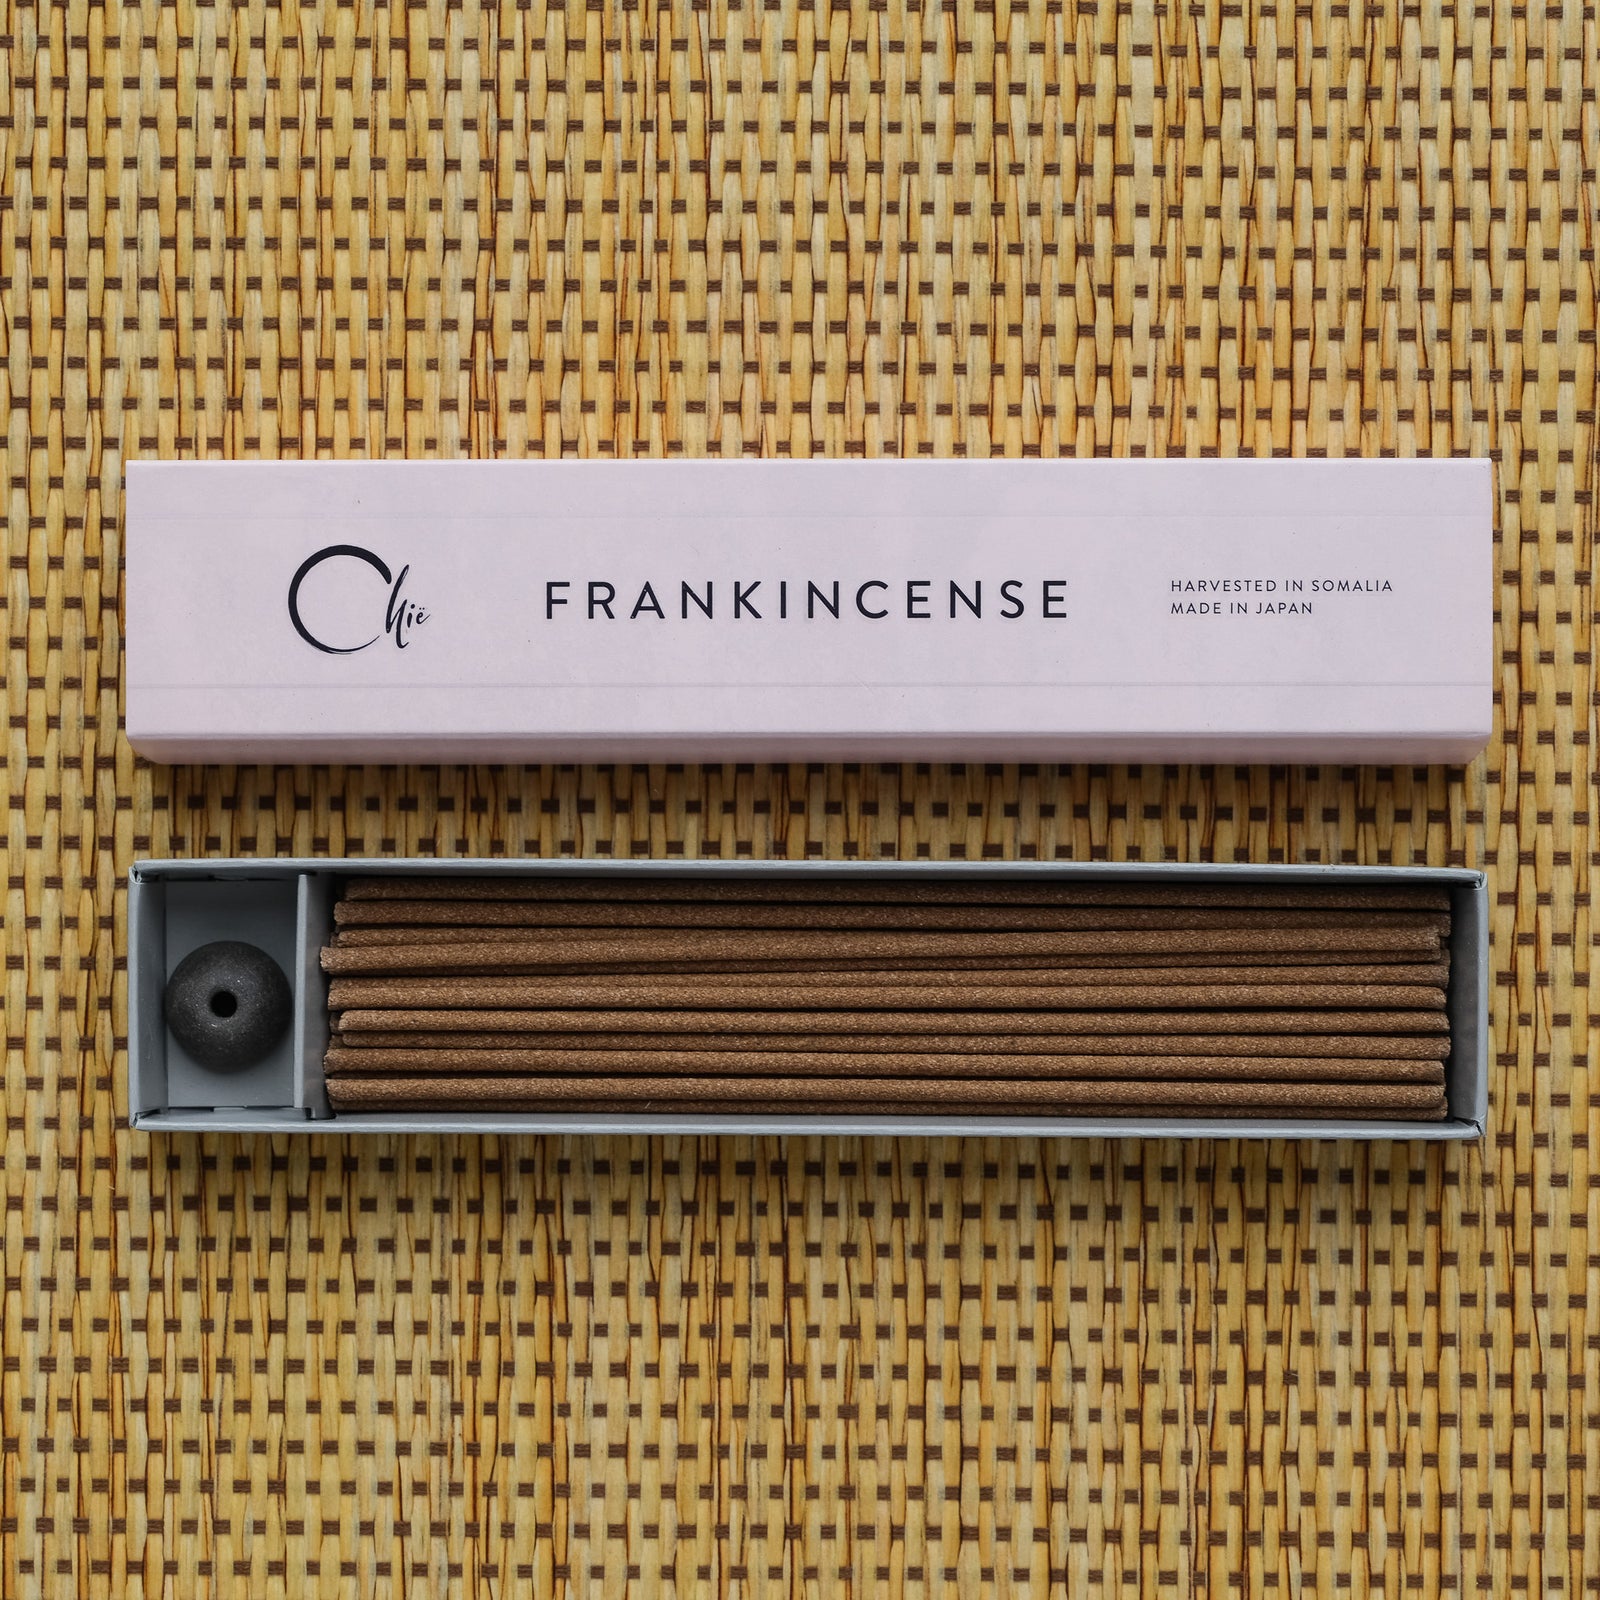 Chie Frankincense Natural Incense